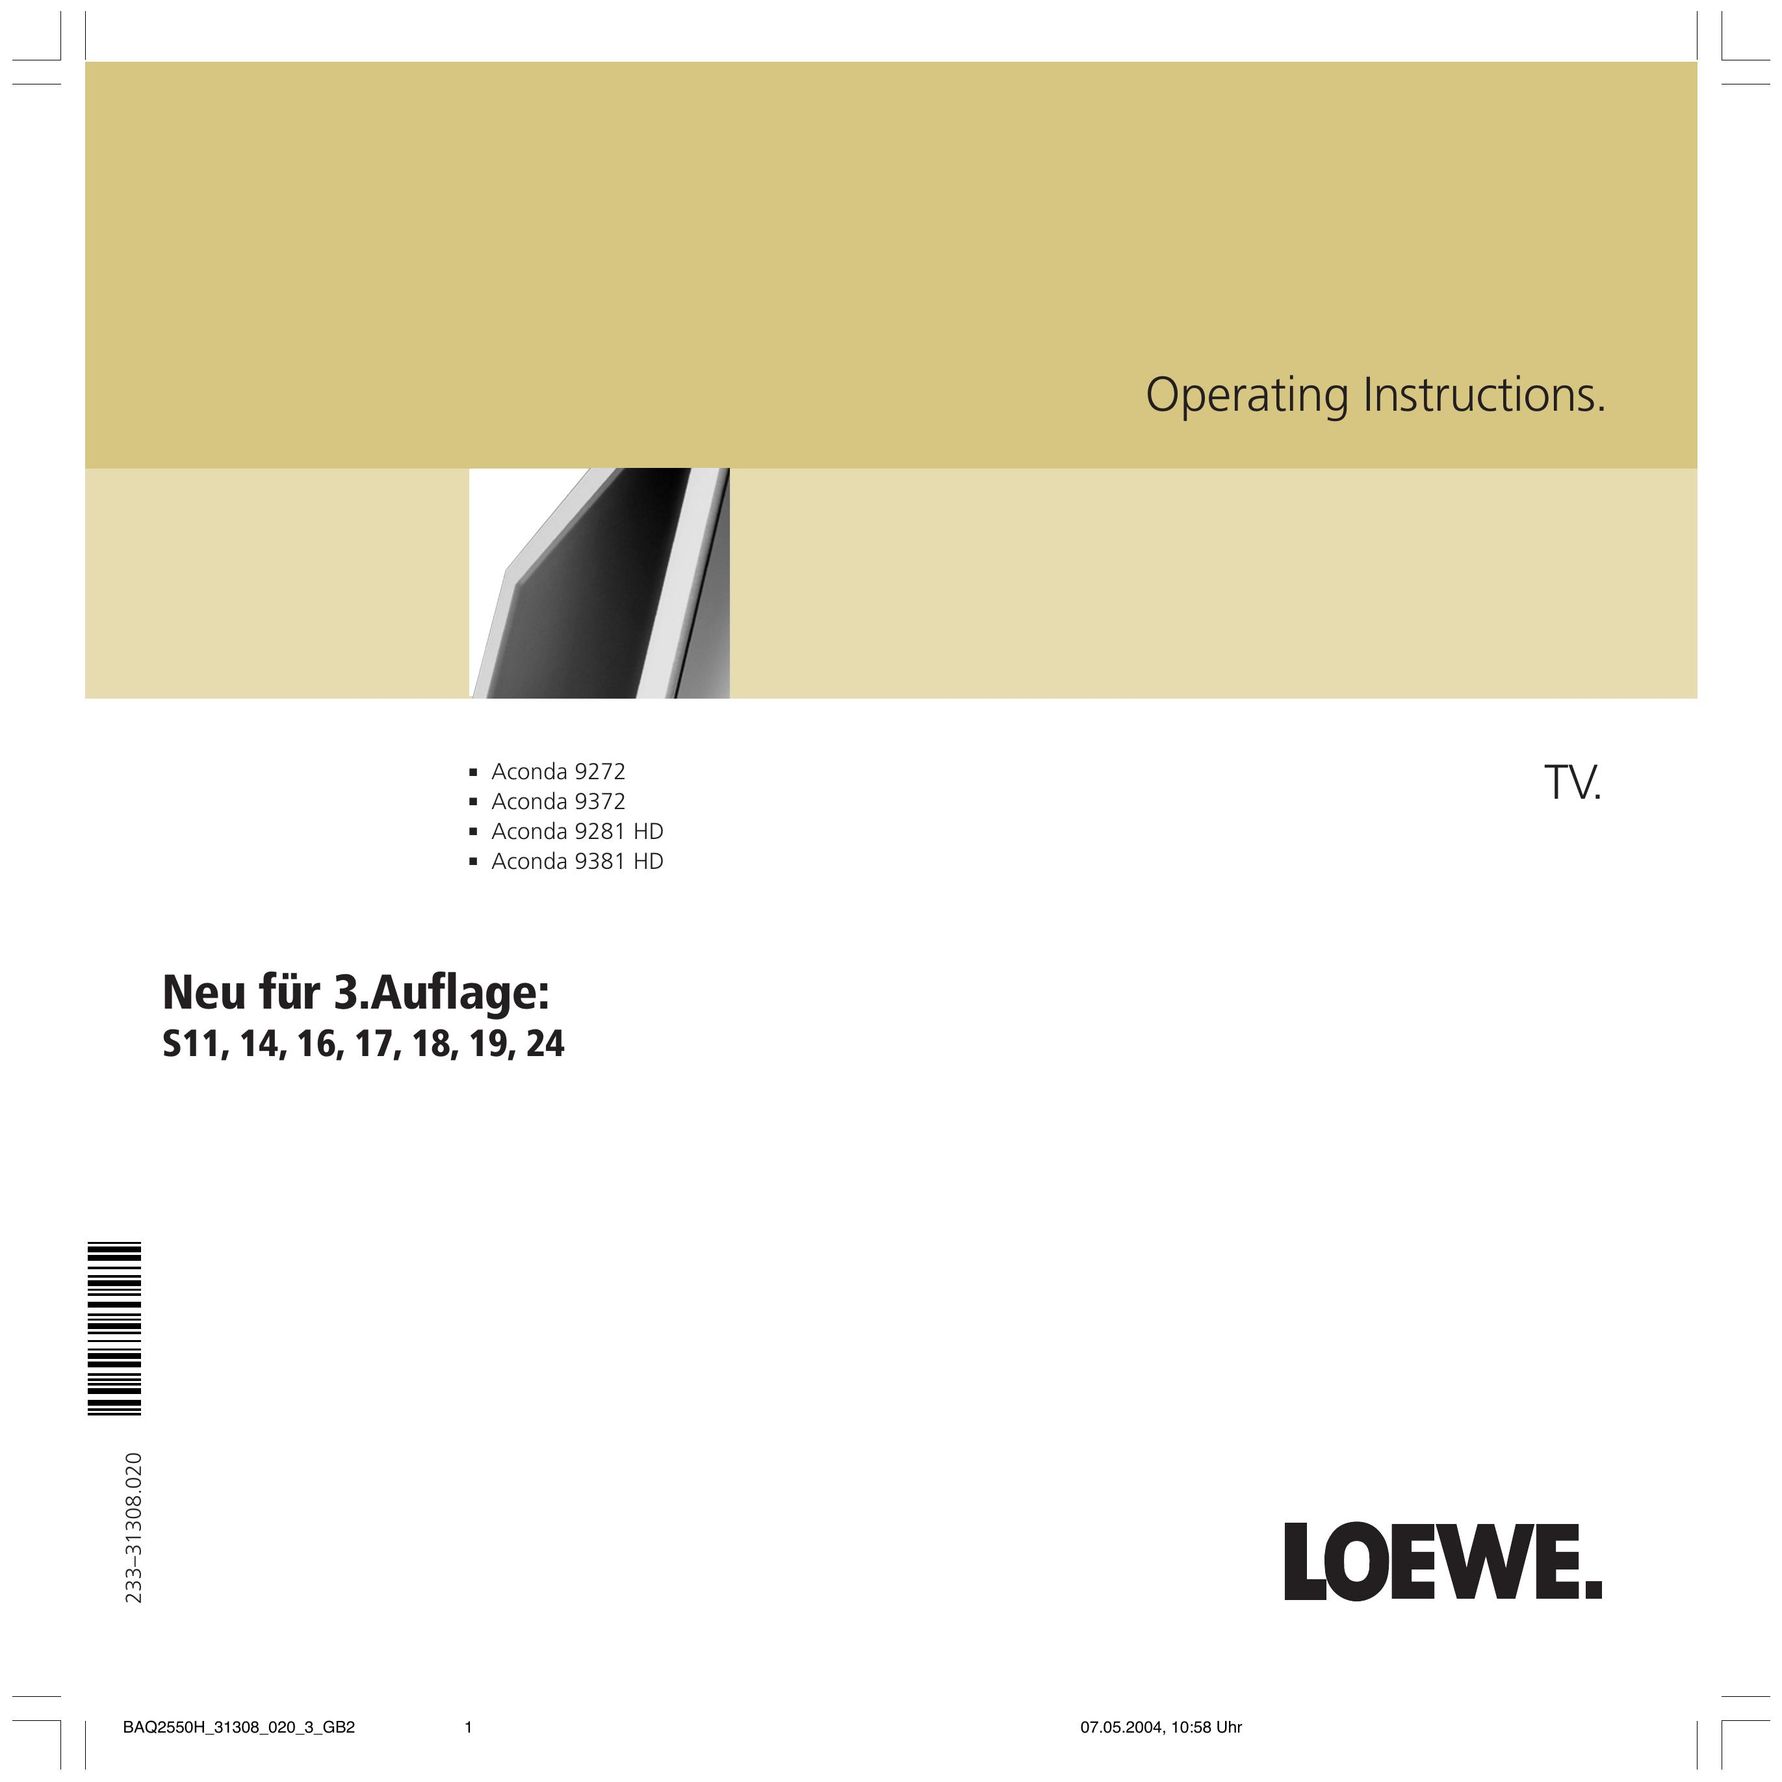 Loewe 9281 HD Flat Panel Television User Manual